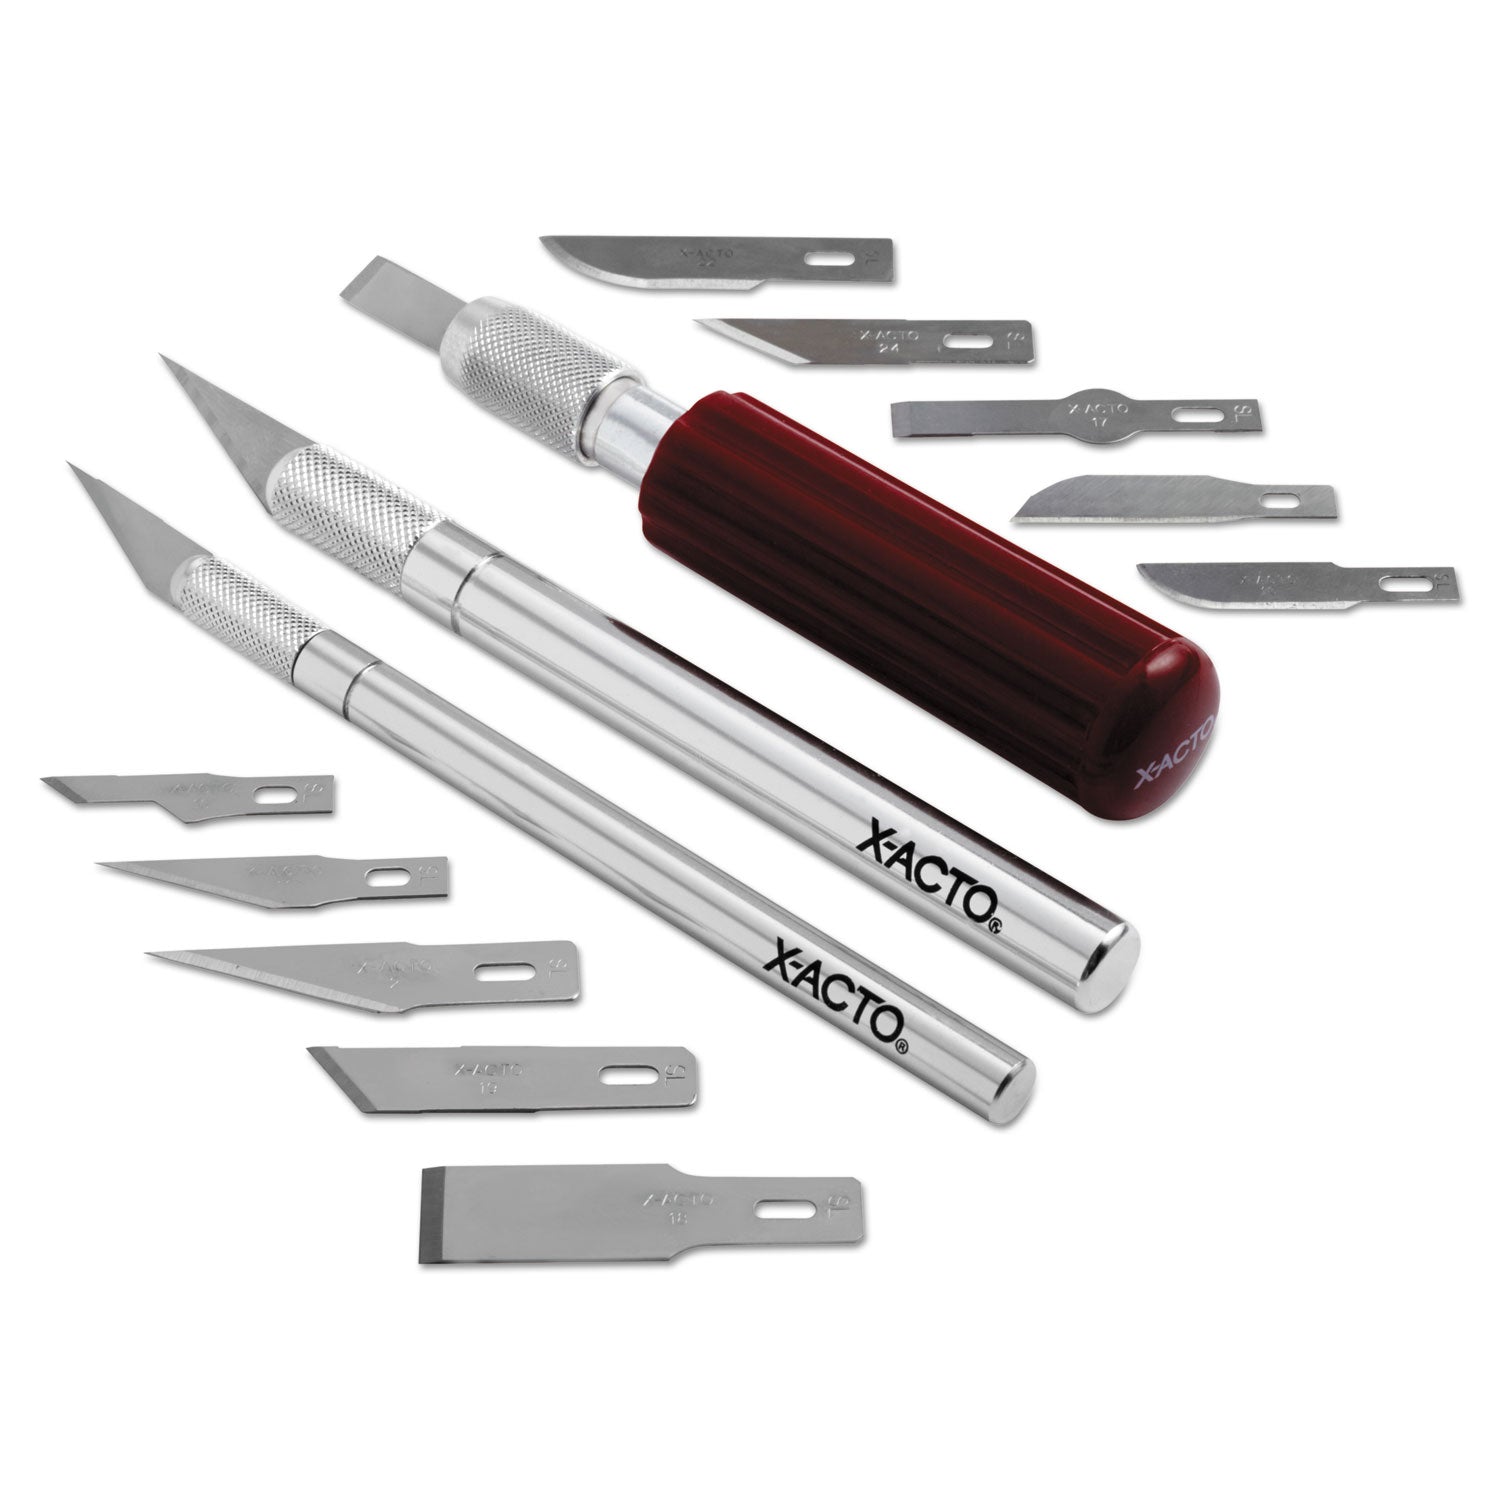 Knife Set, 3 Knives, 10 Blades, Carrying Case - 